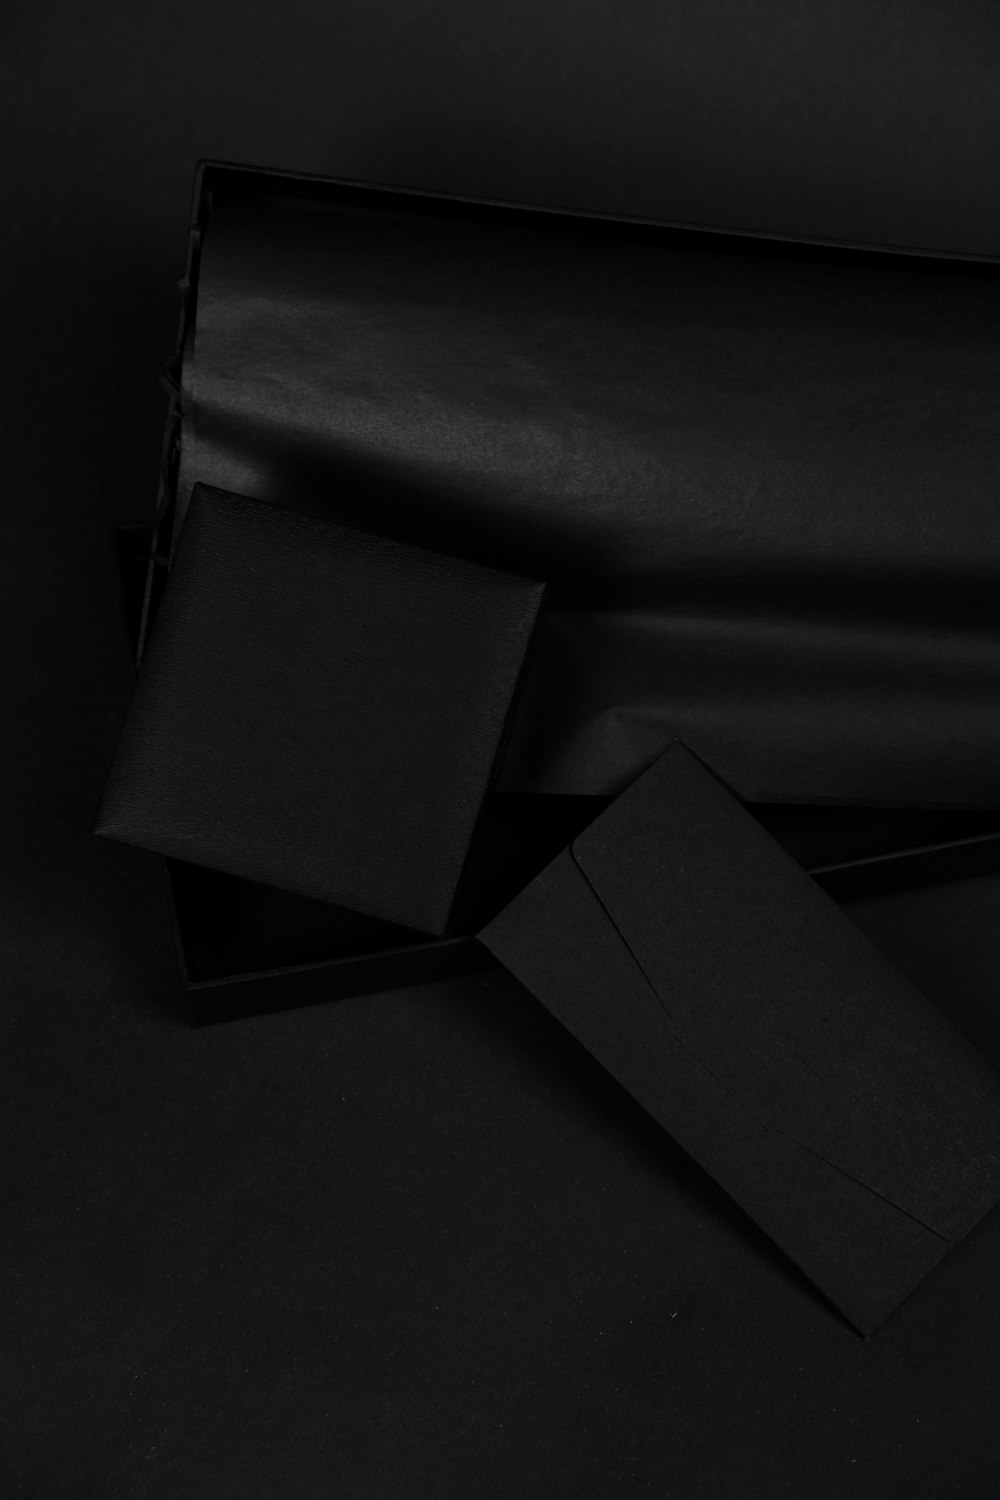 scatola nera su tessuto nero